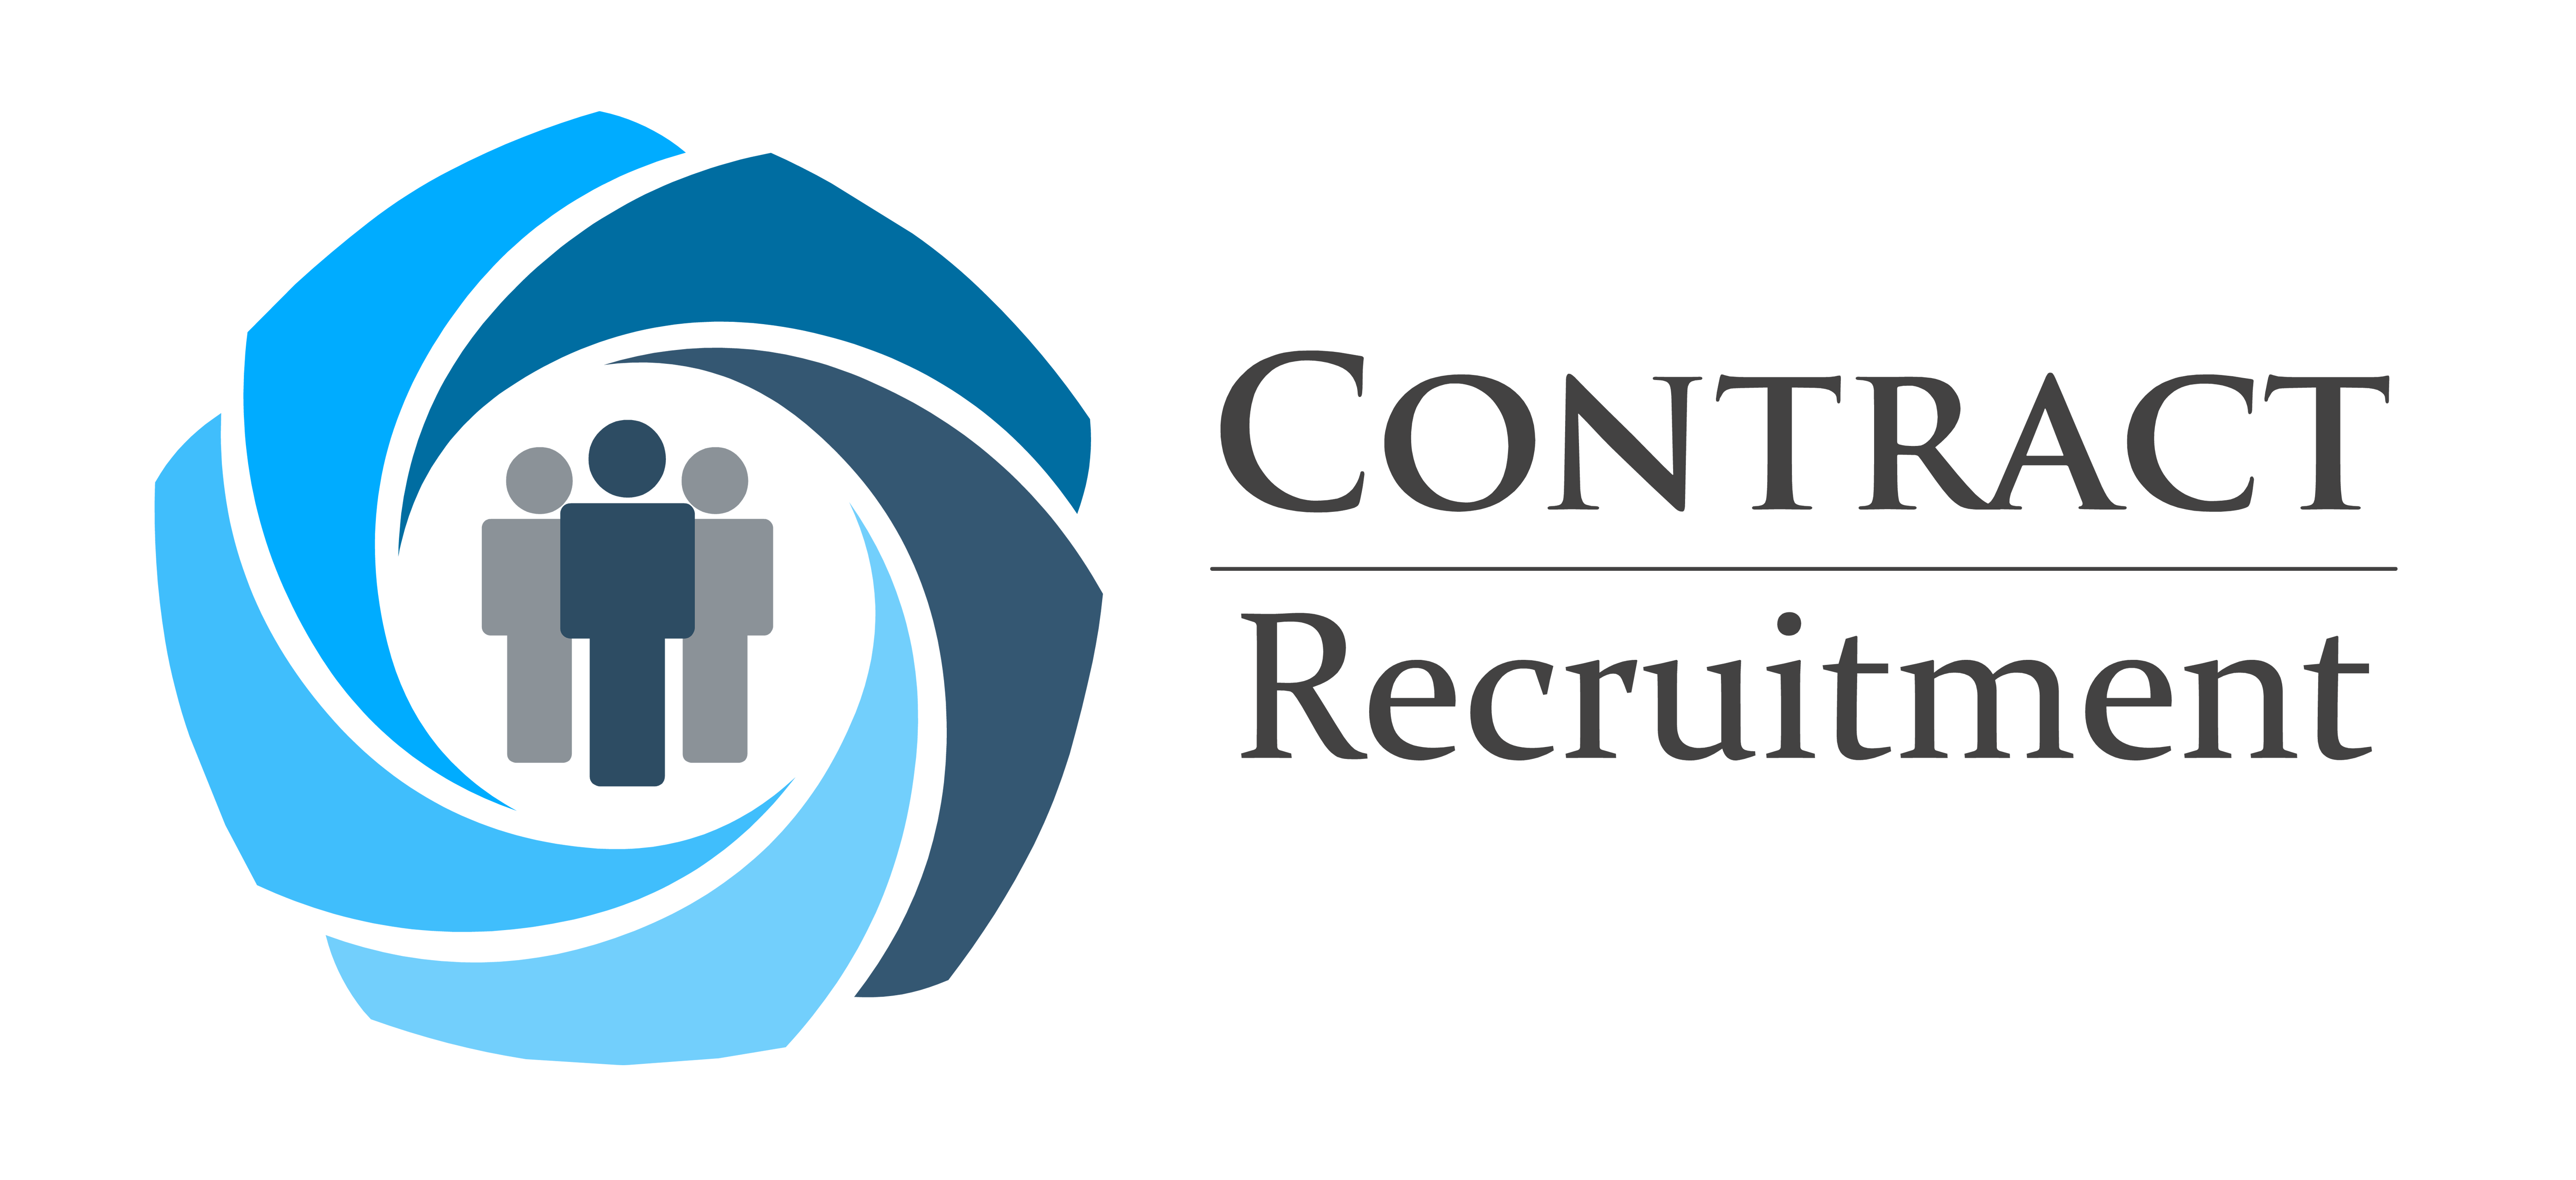 Contract Recruitment